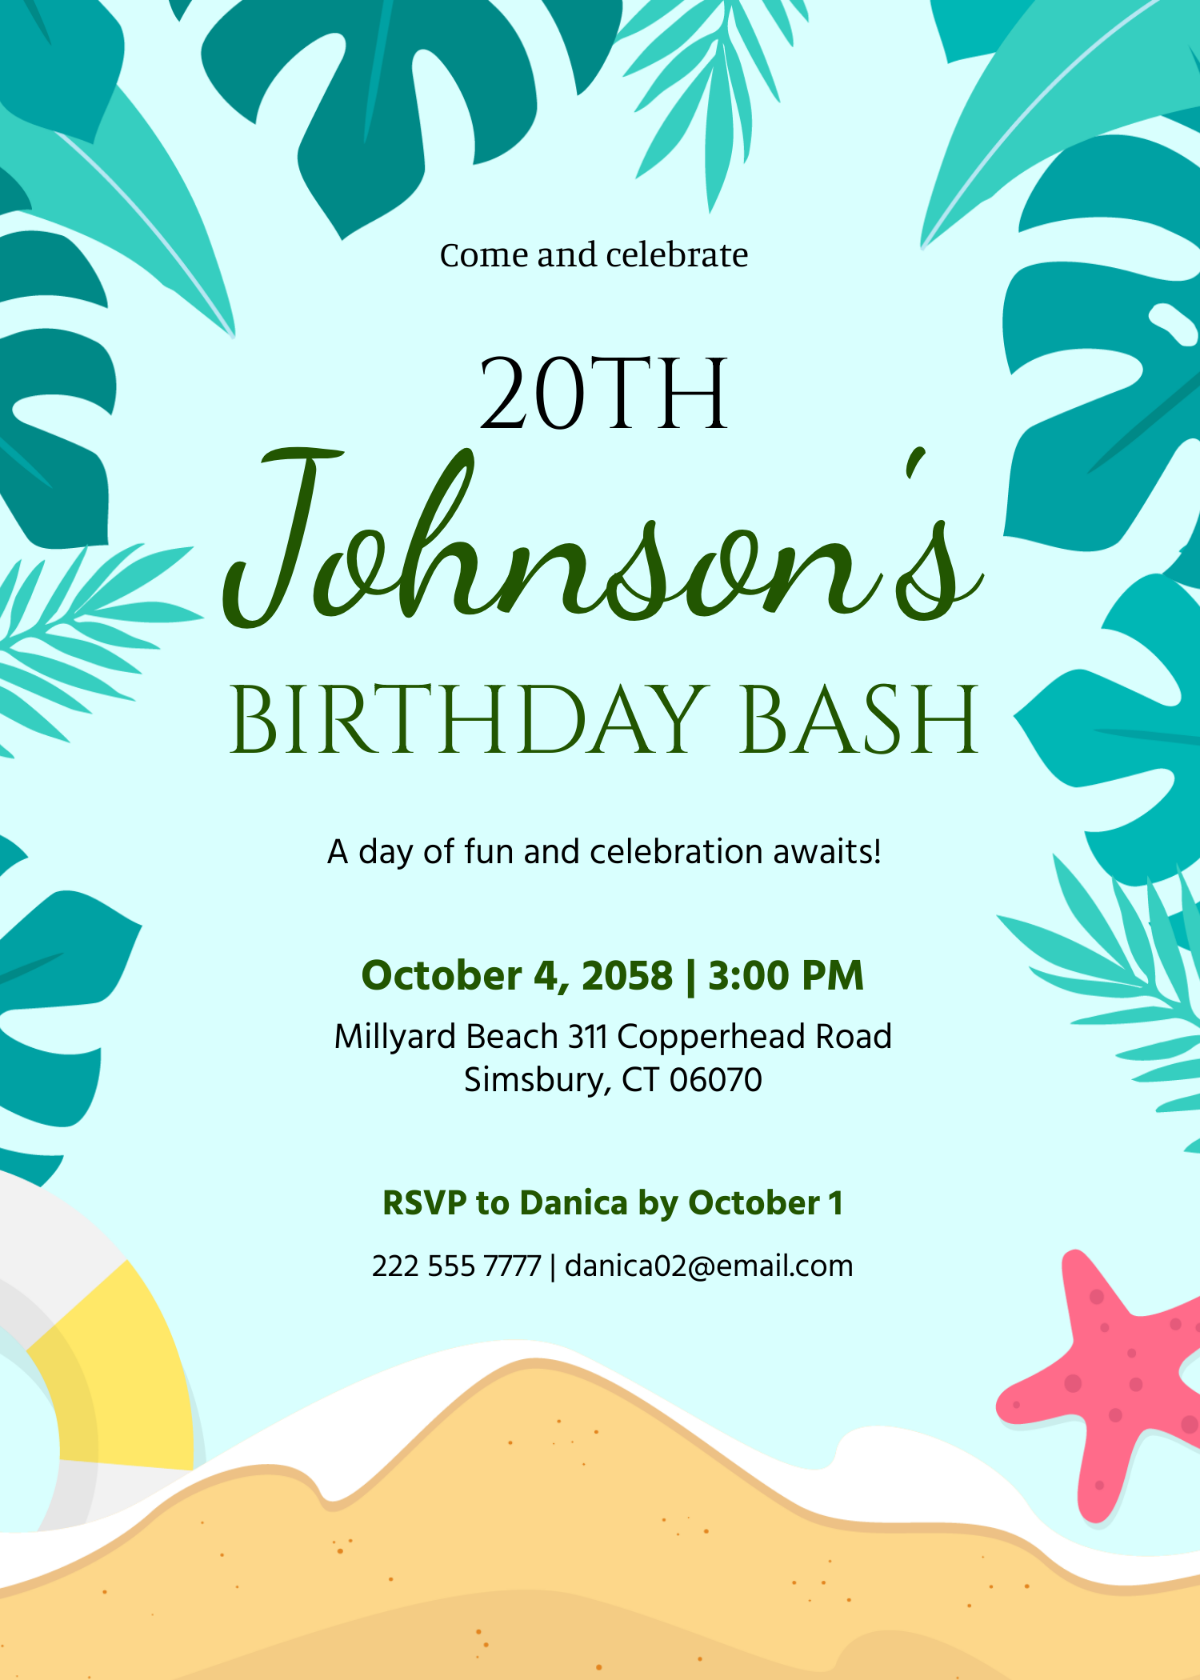 Beach Birthday Party Invitation